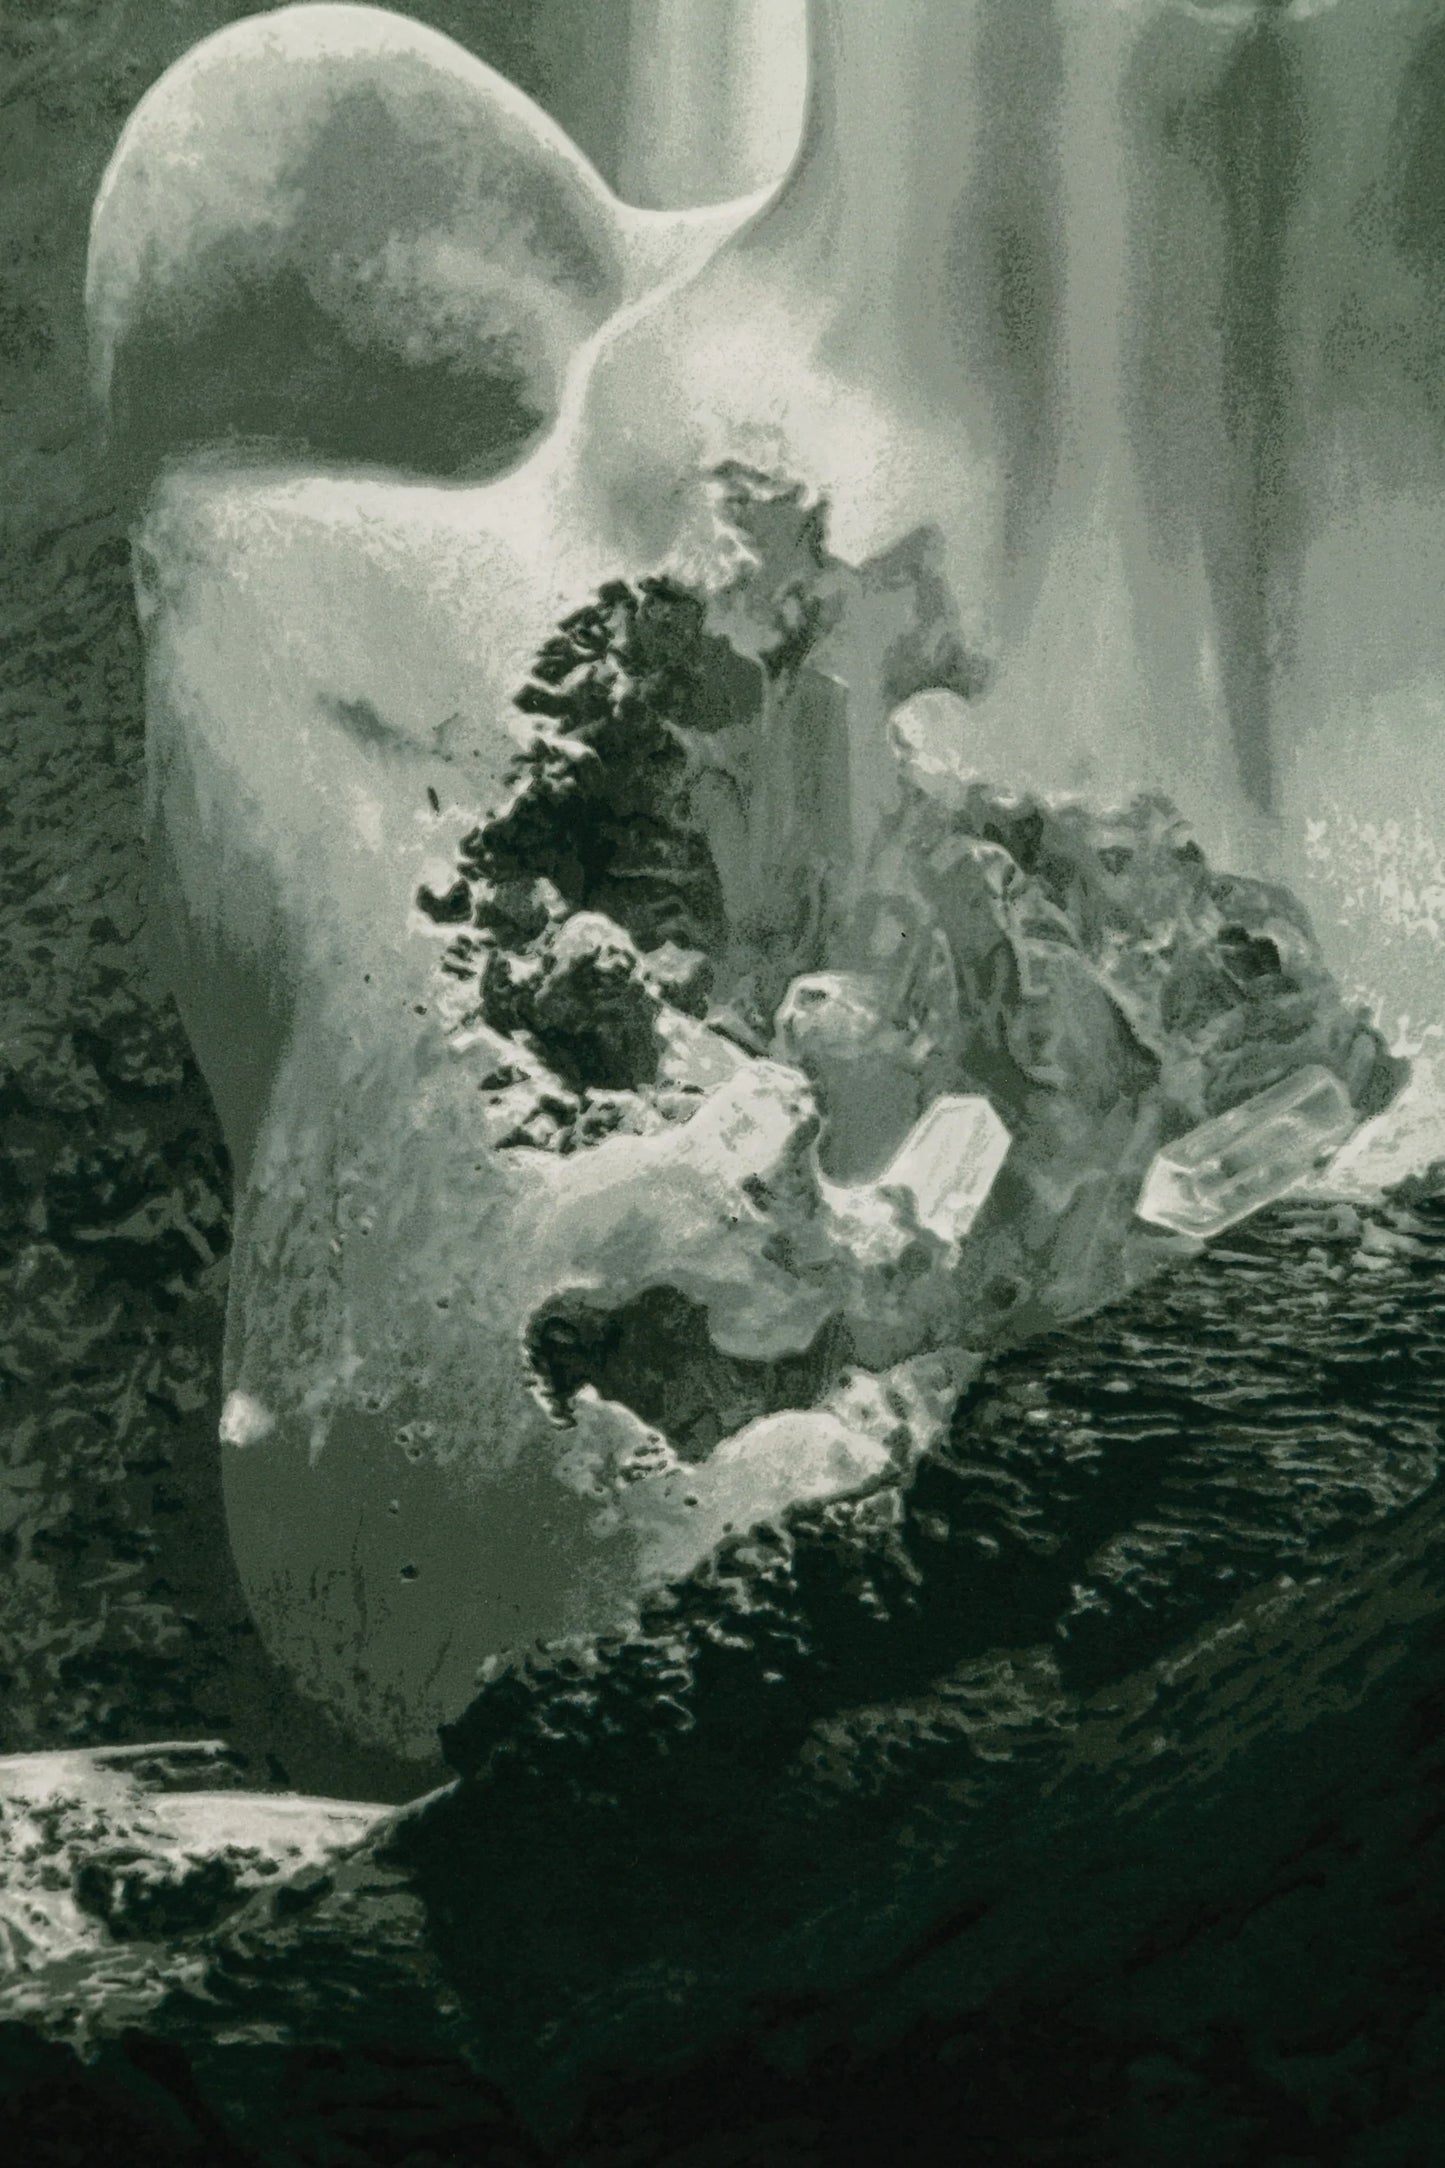 Daniel Arsham: Limited Edition Grotto of Laocoön Print